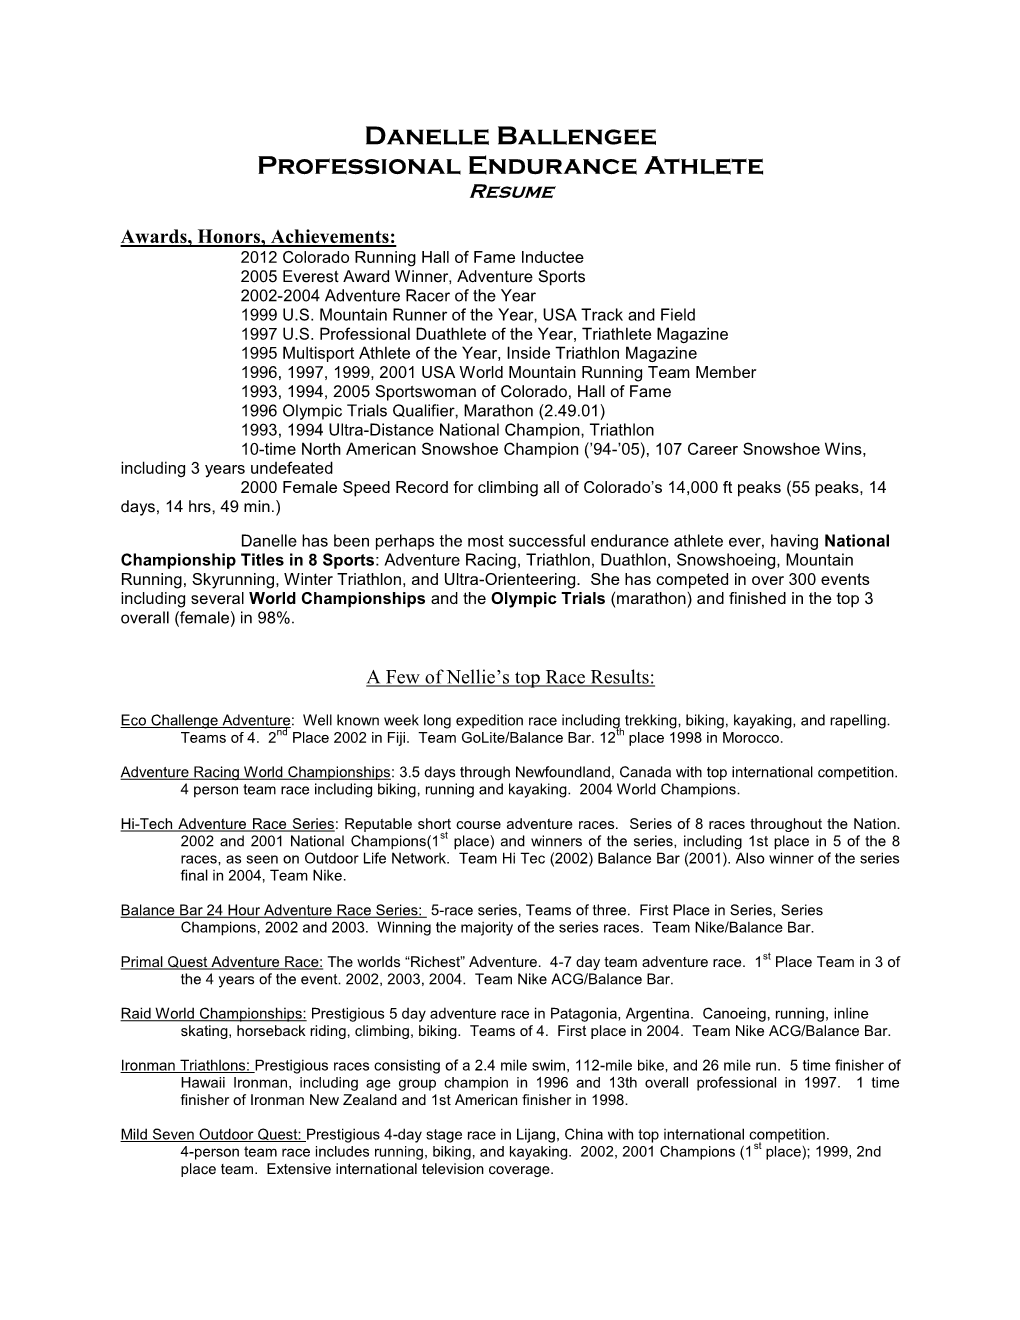 Danelle Ballengee Professional Endurance Athlete Resume